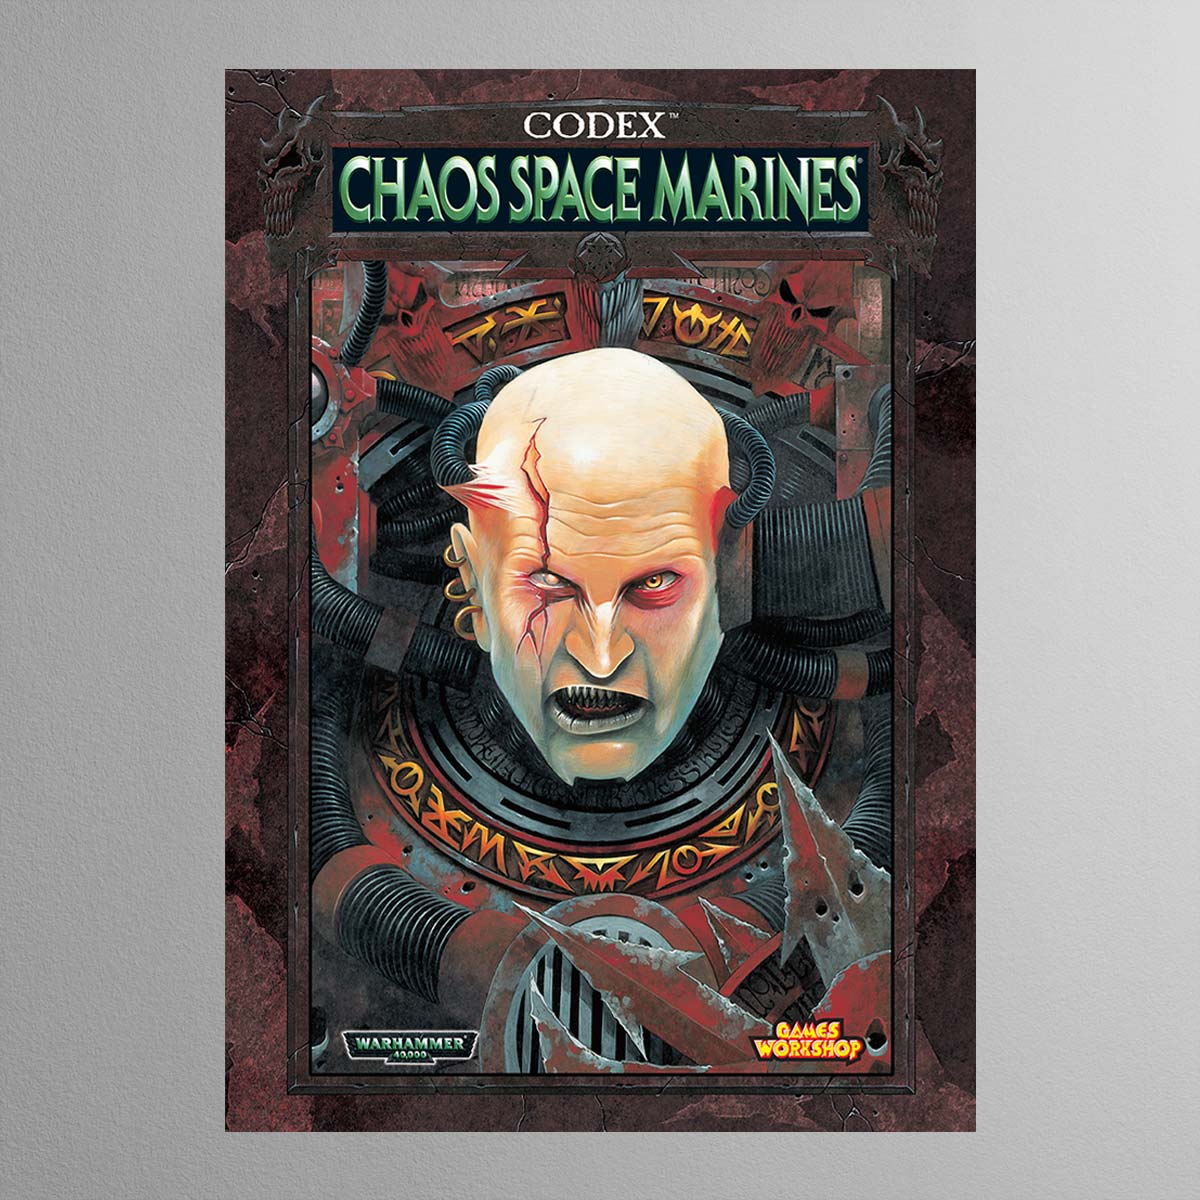 Warhammer 40,000 3rd Edition – Chaos Space Marines – Print